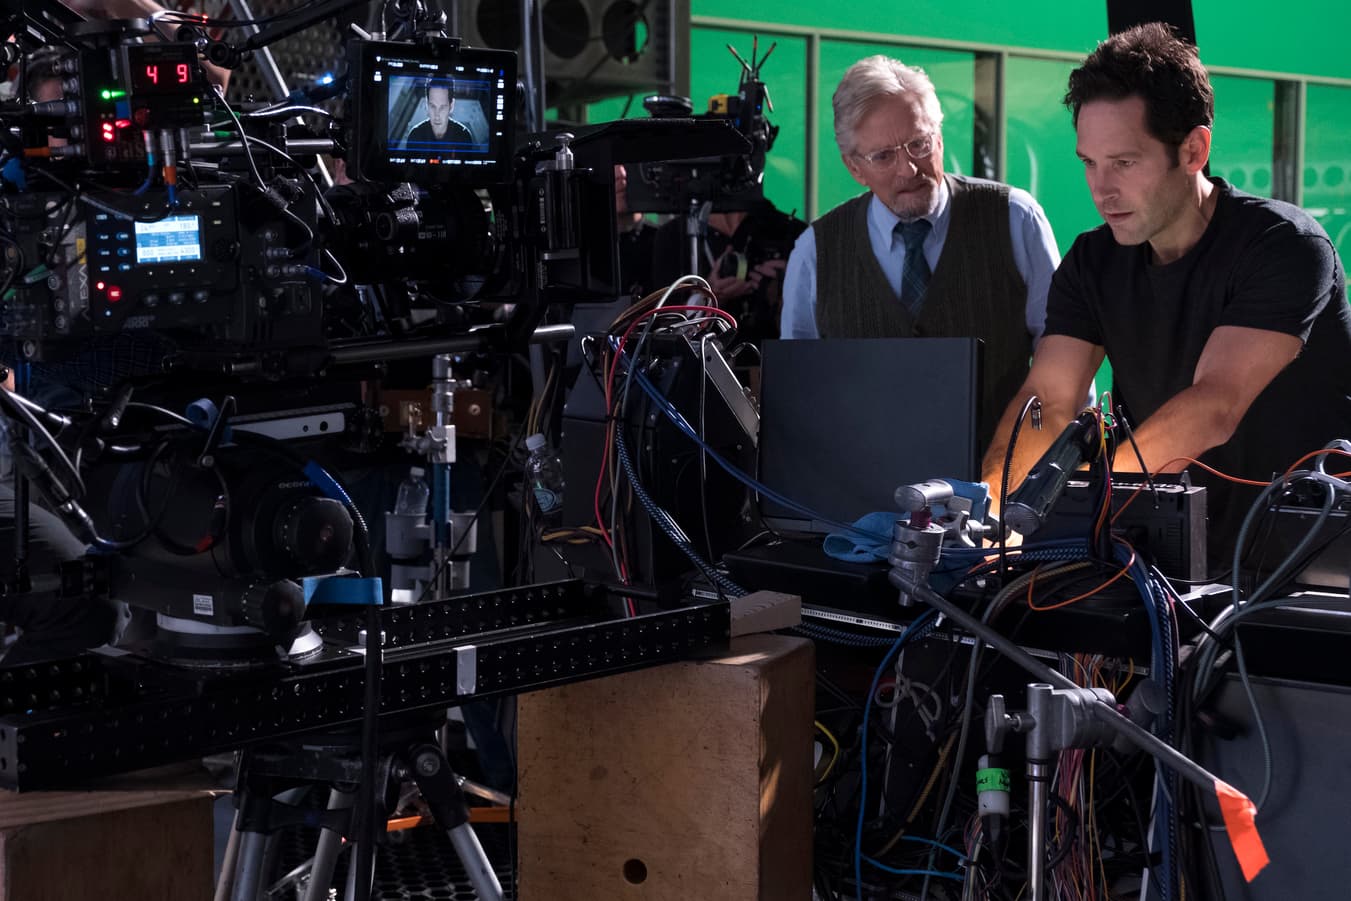 Hank Pym (Michael Douglas) and Ant-Man/Scott Lang (Paul Rudd) BTS on set.